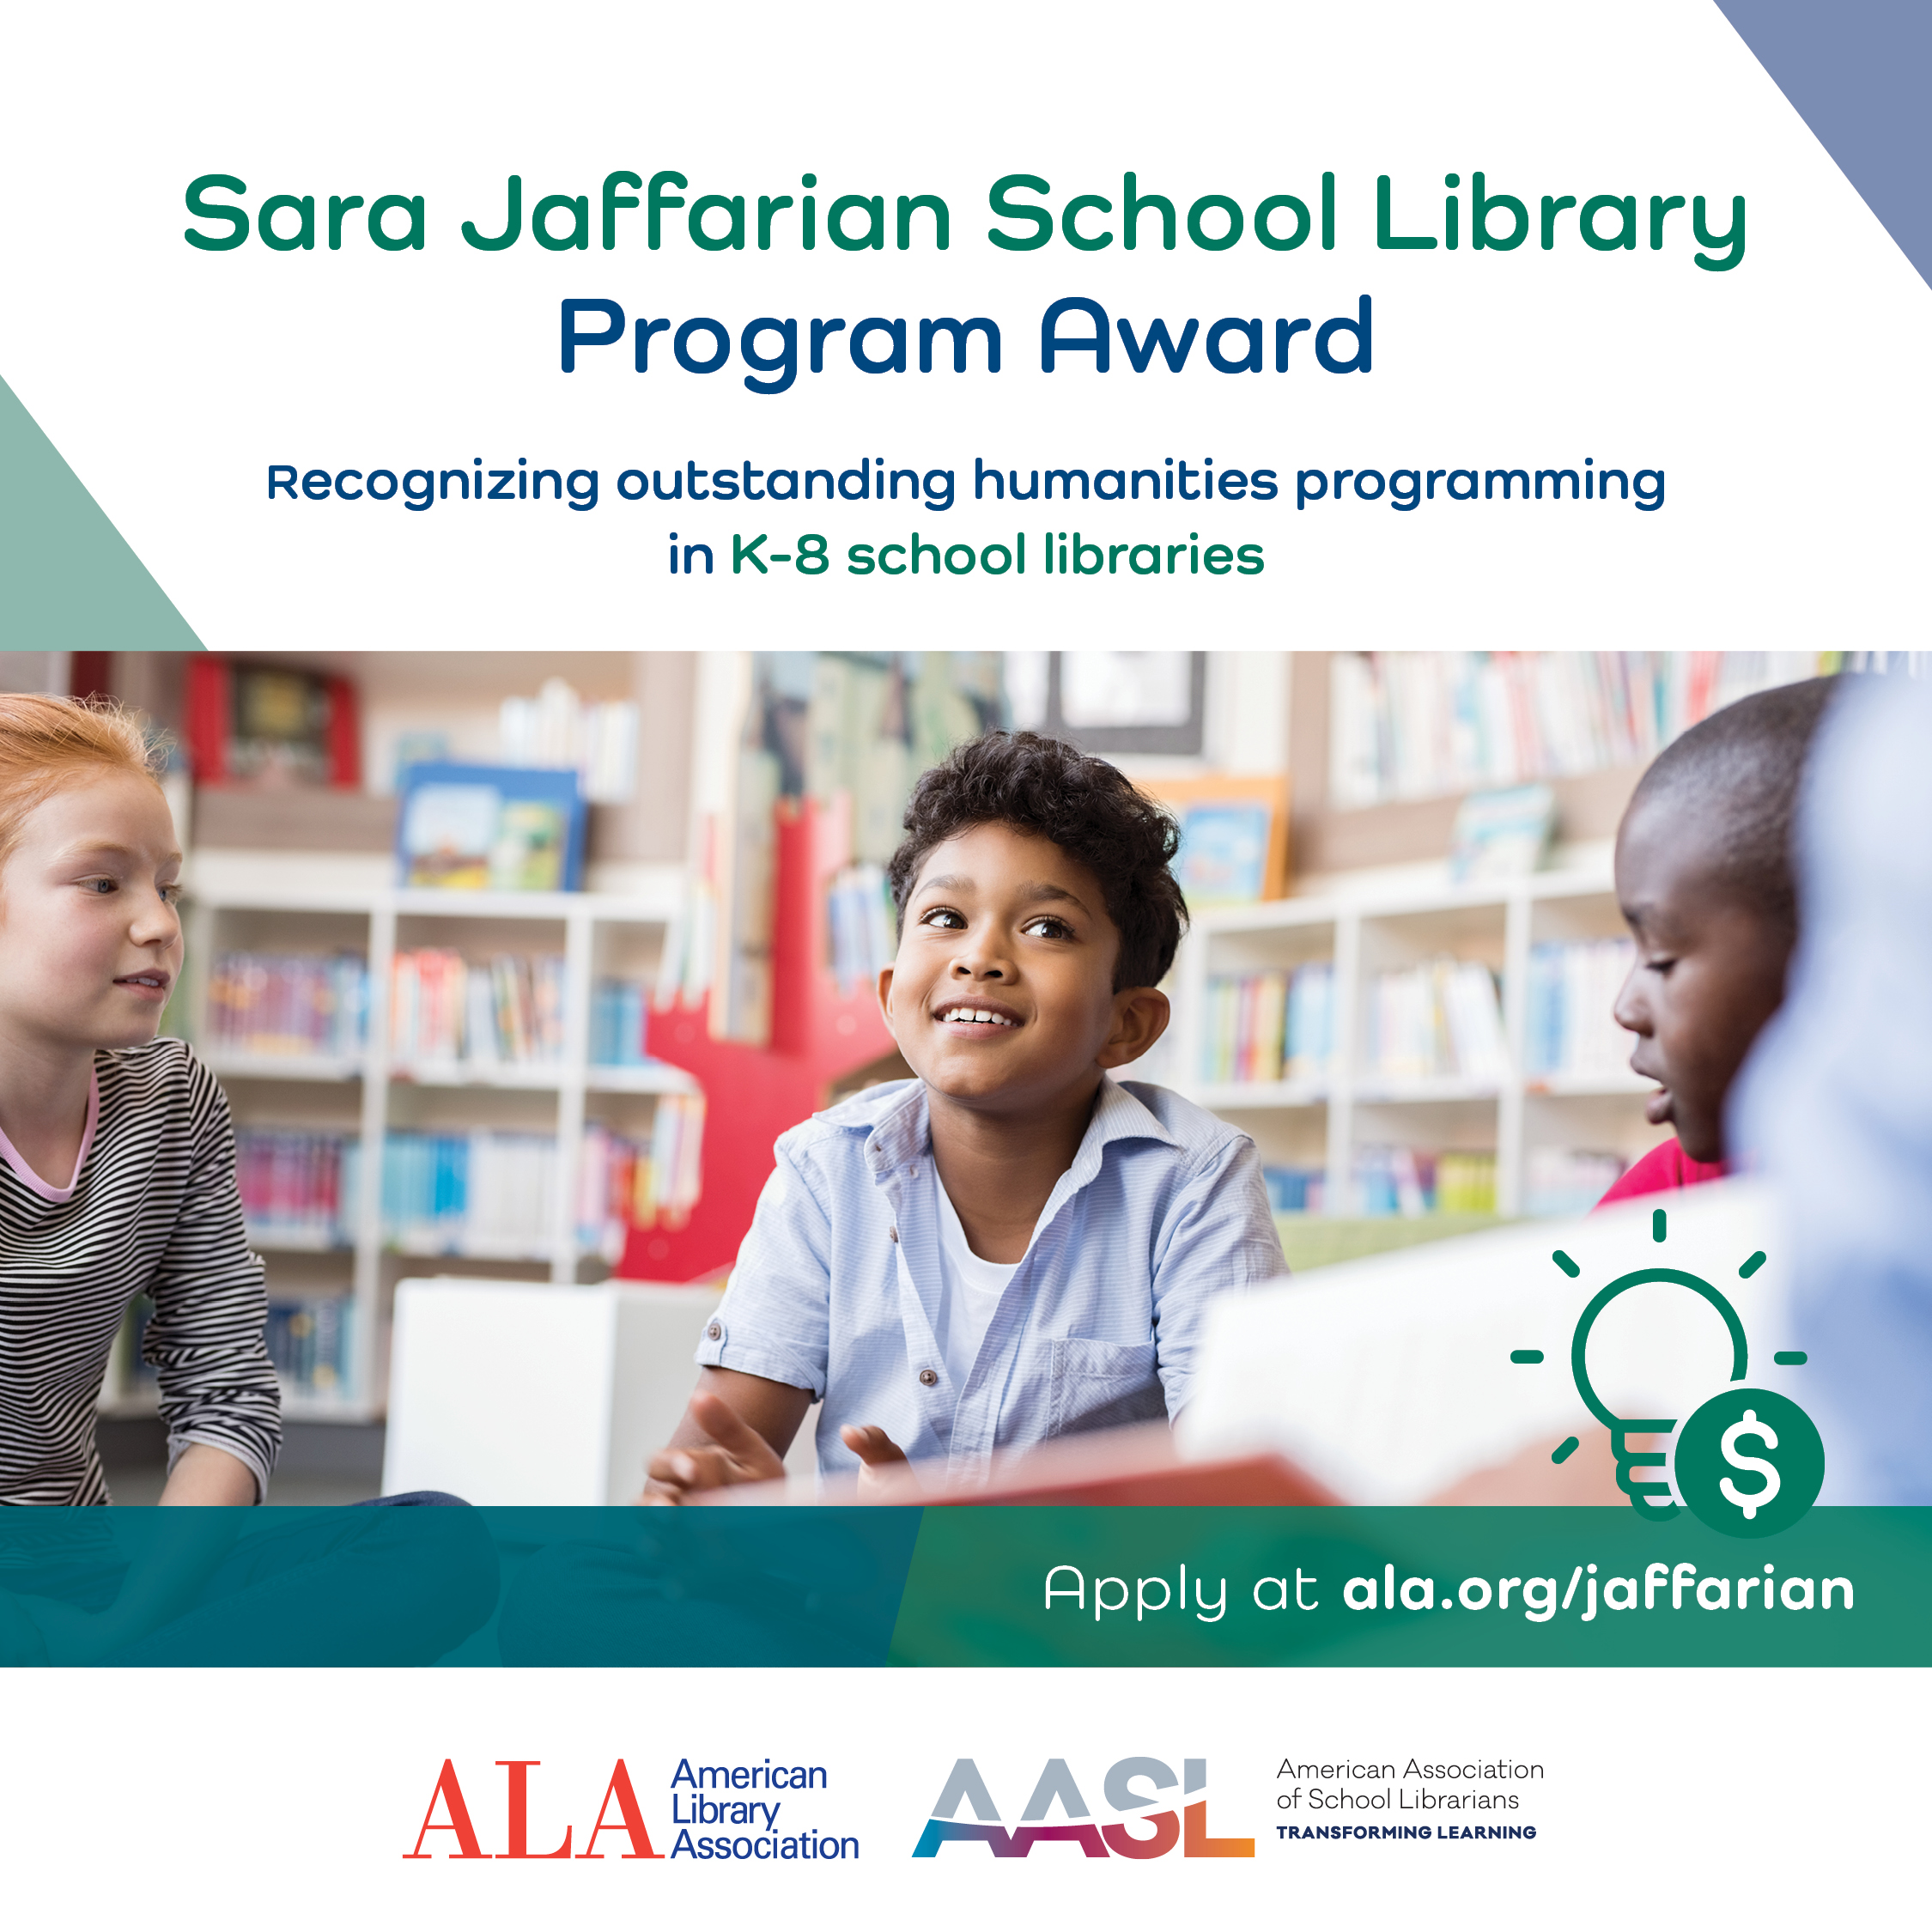  Sara Jaffarian School Library Program Award. Recognizing outstanding humanities programming in K-8 school libraries. Apply at ala.org/jaffarian 